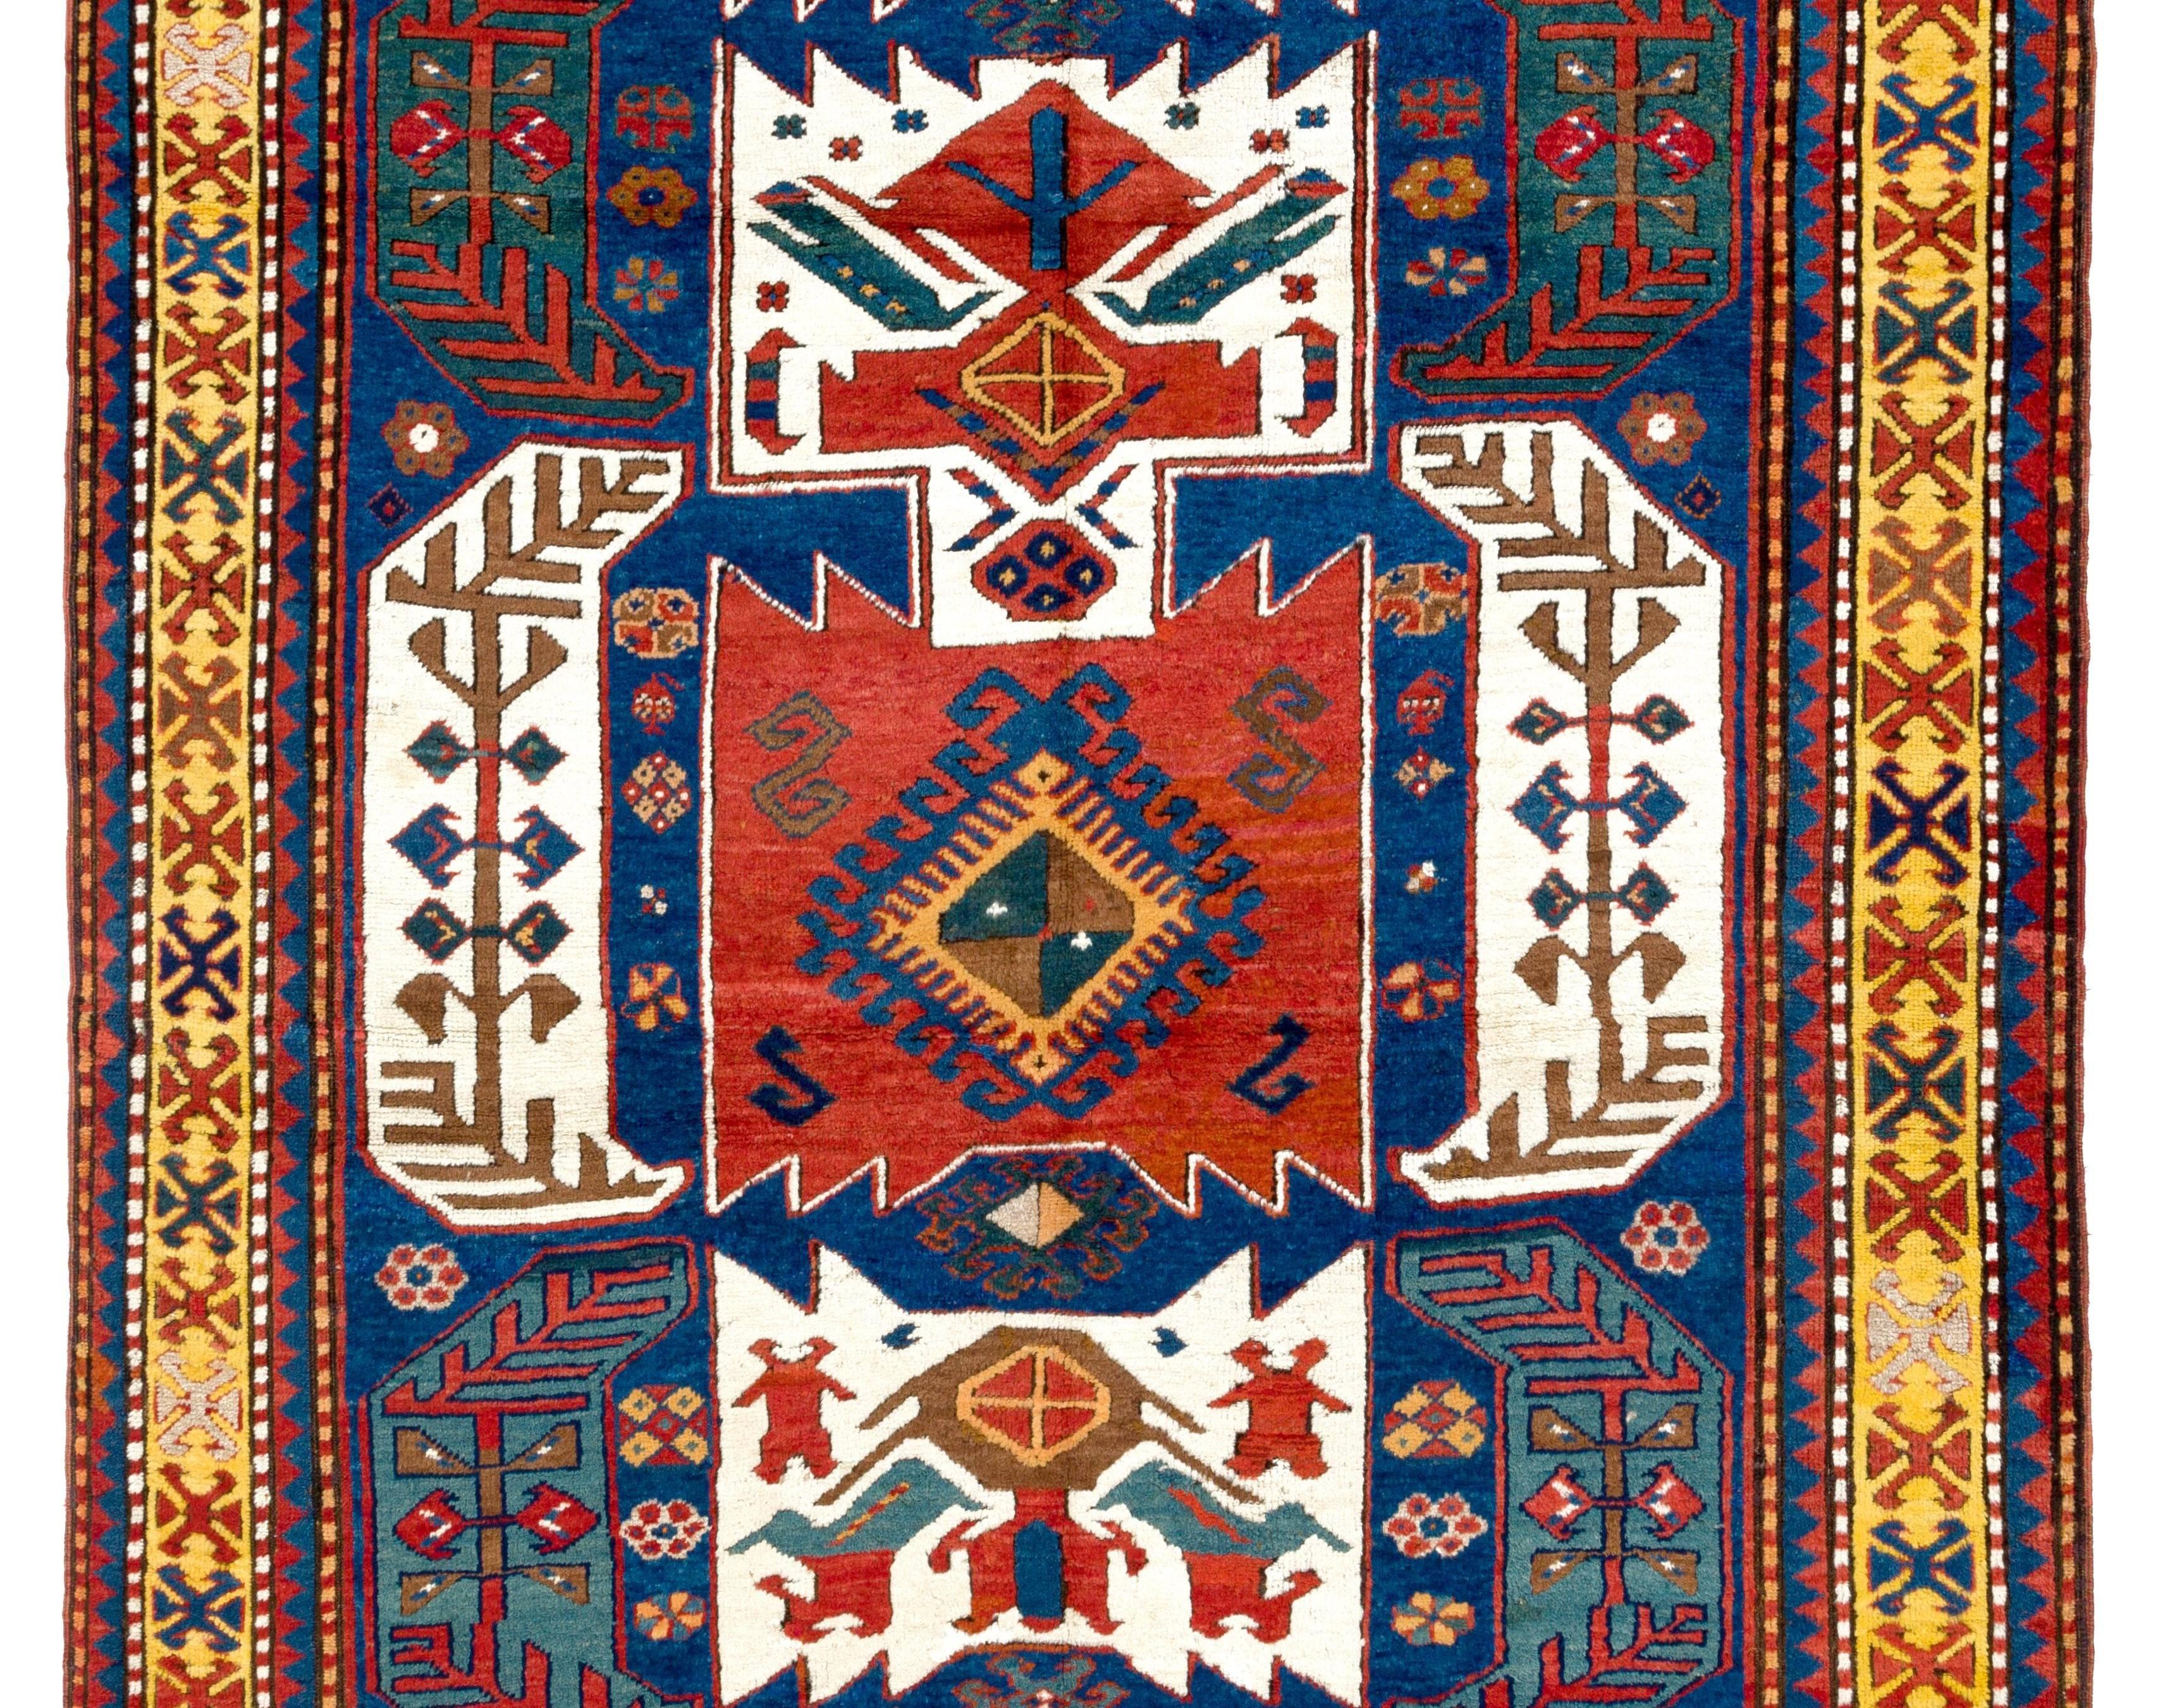 Hand-Knotted 5.4 x 9 Ft Antique Caucasian Kasim Ushak Kazak Rug. Excellent Original Condition